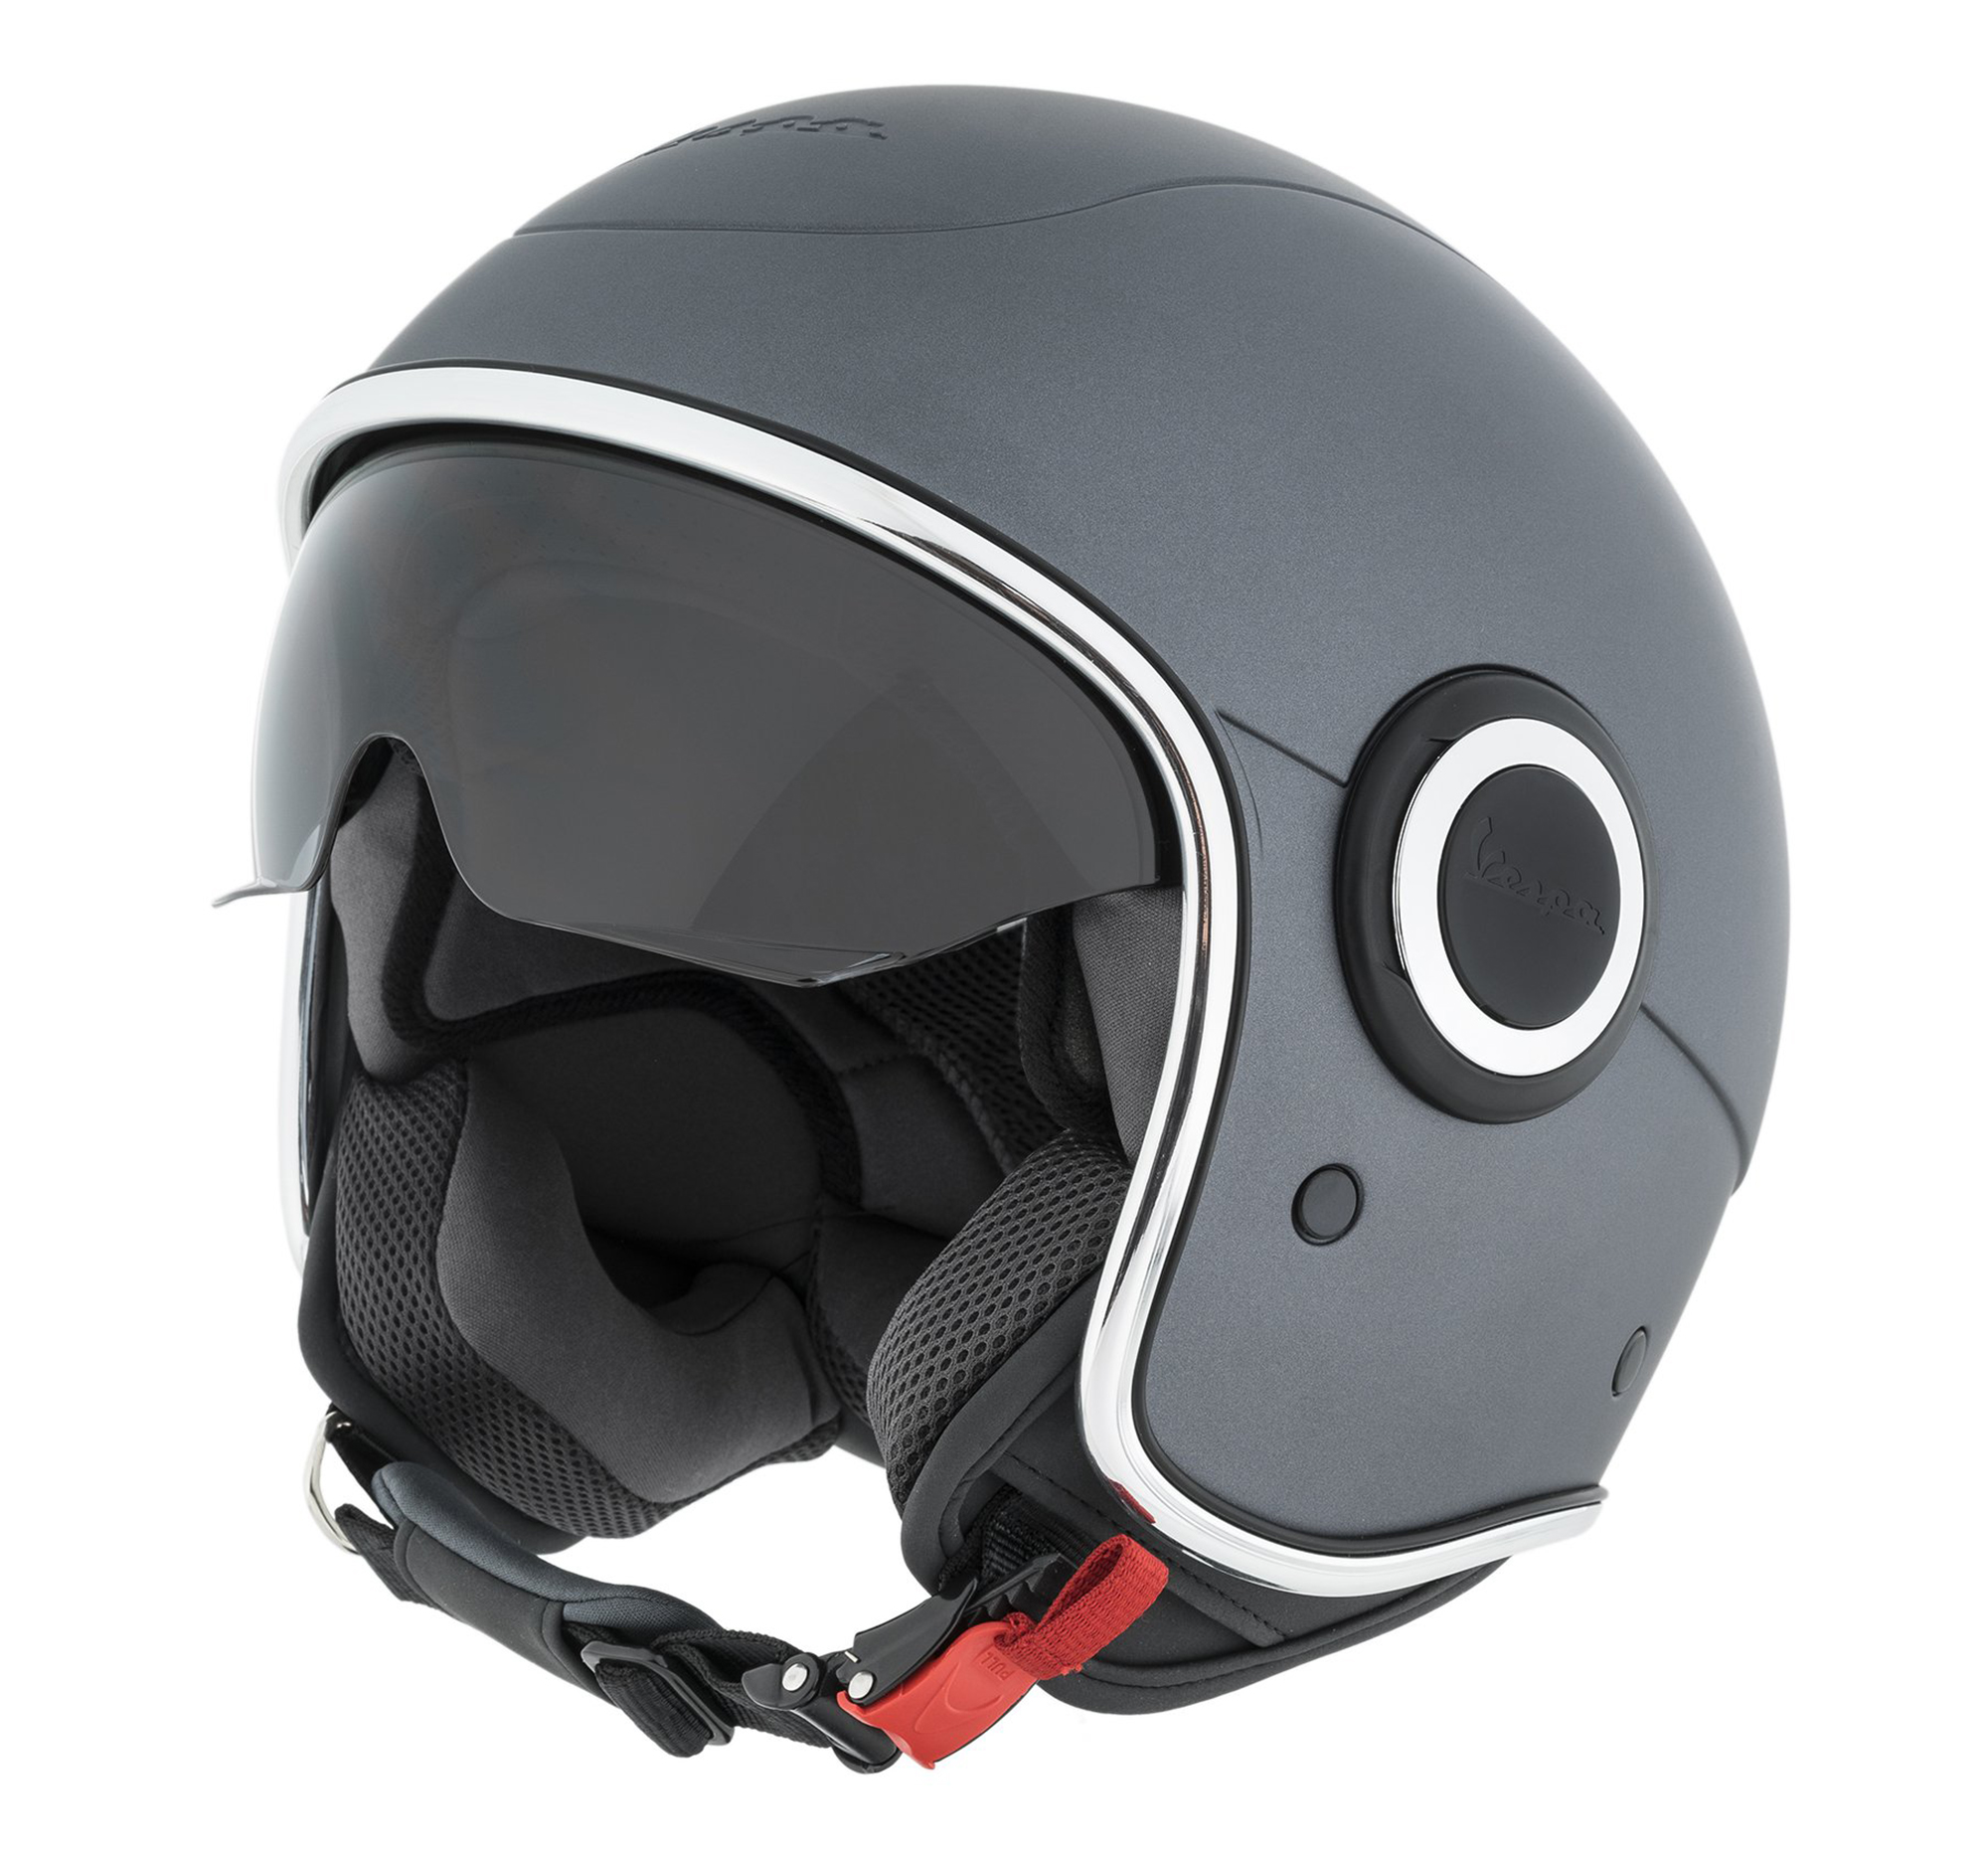 Sluimeren Kamer overdrijving Vespa jet helmet VJ1 gray titanium | Piaggio-Vespa Online Shop by RWN